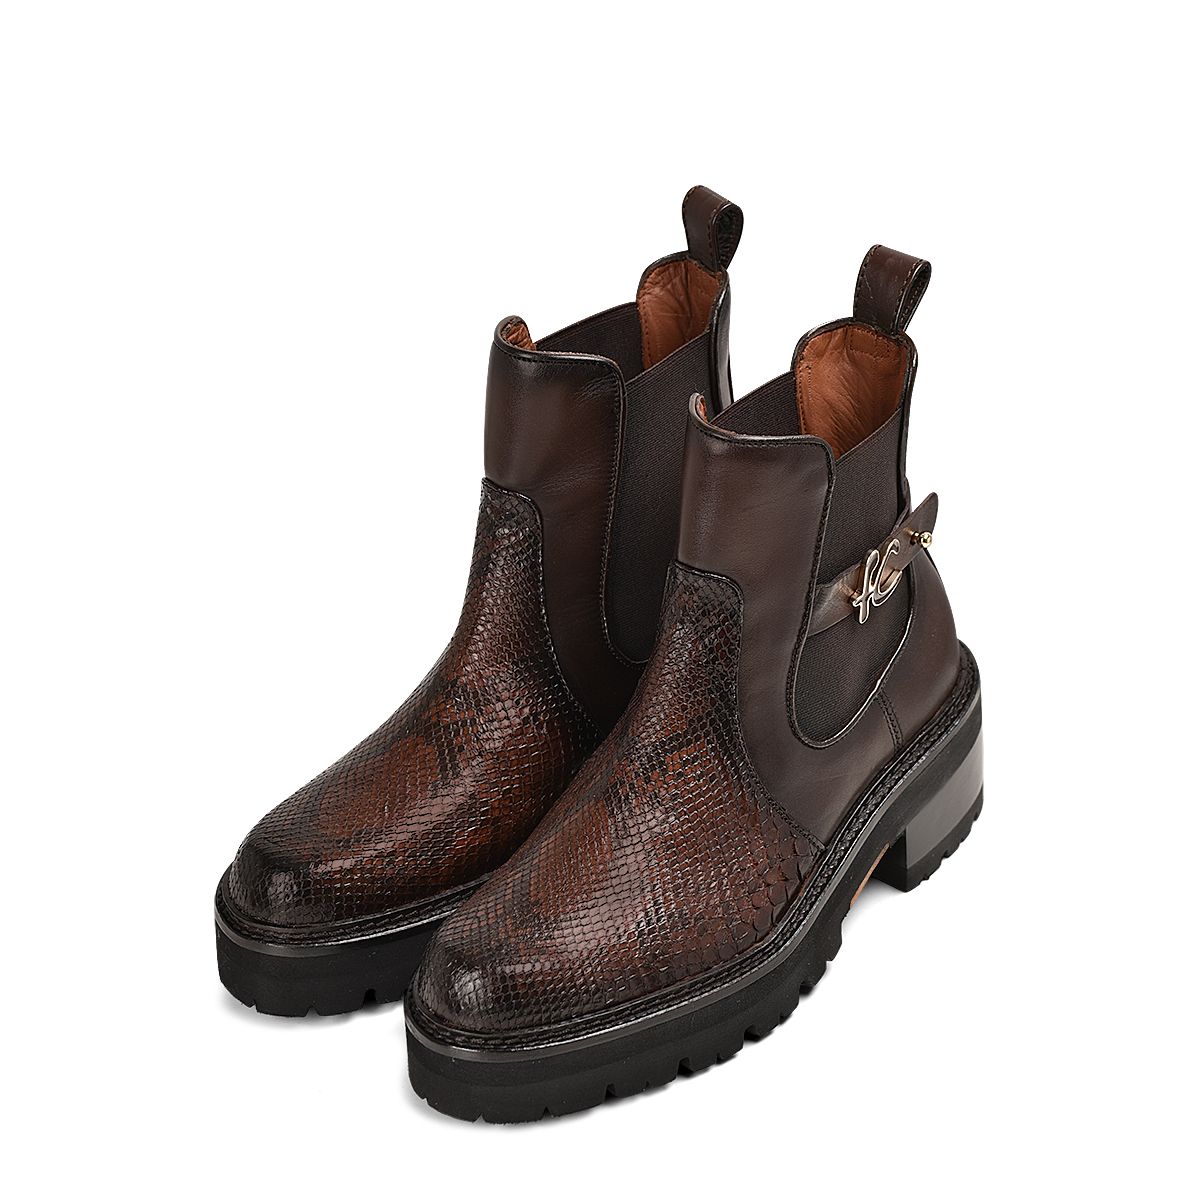 47WPBTS - Cuadra chocolate casual fashion python leather ankle boots for women-CUADRA-Kuet-Cuadra-Boots